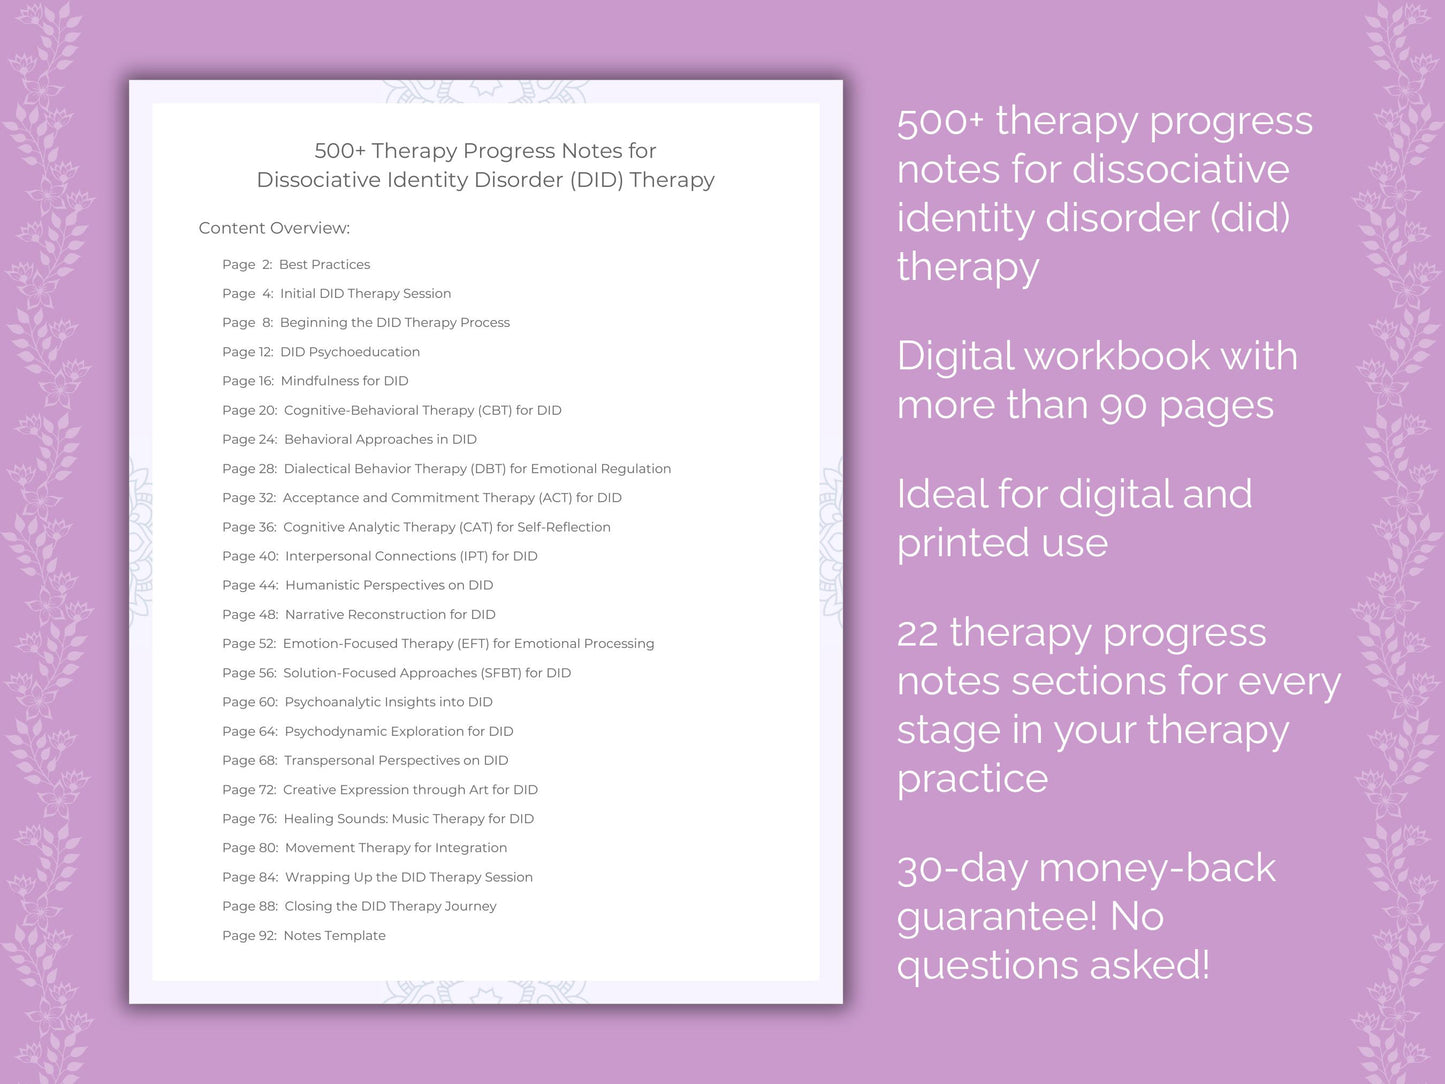 Dissociative Identity Disorder (DID) Therapy Progress Notes